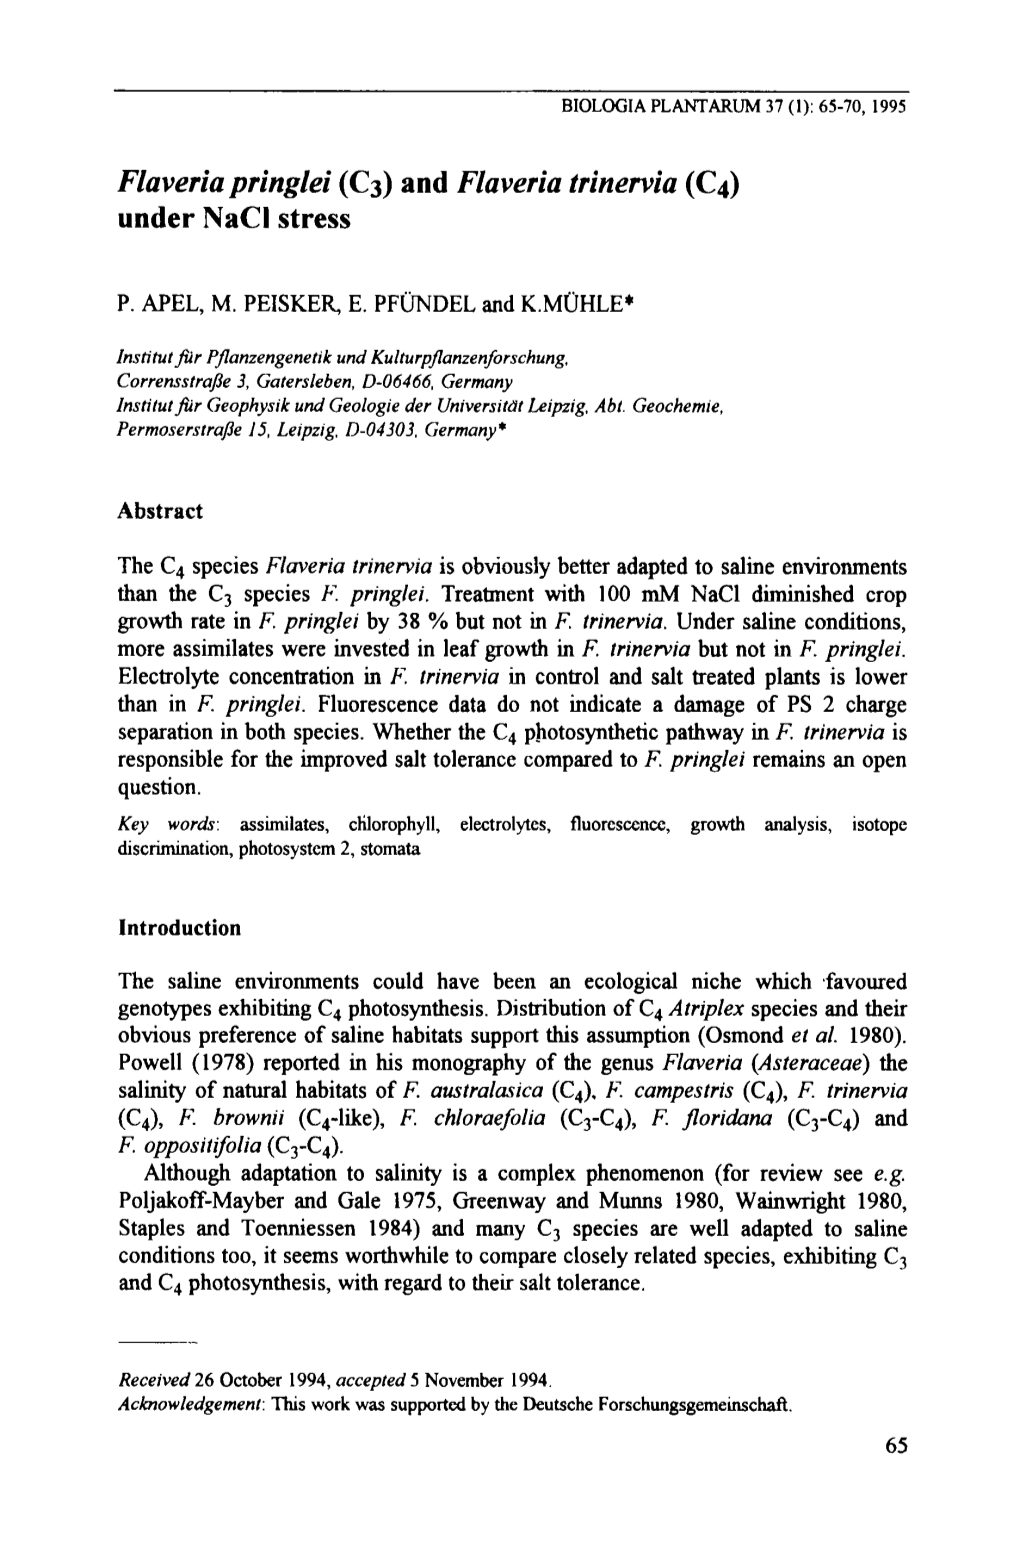 Flaveria Pringlei (C3) Andflaveria Trinervia (C4) Under Nacl Stress